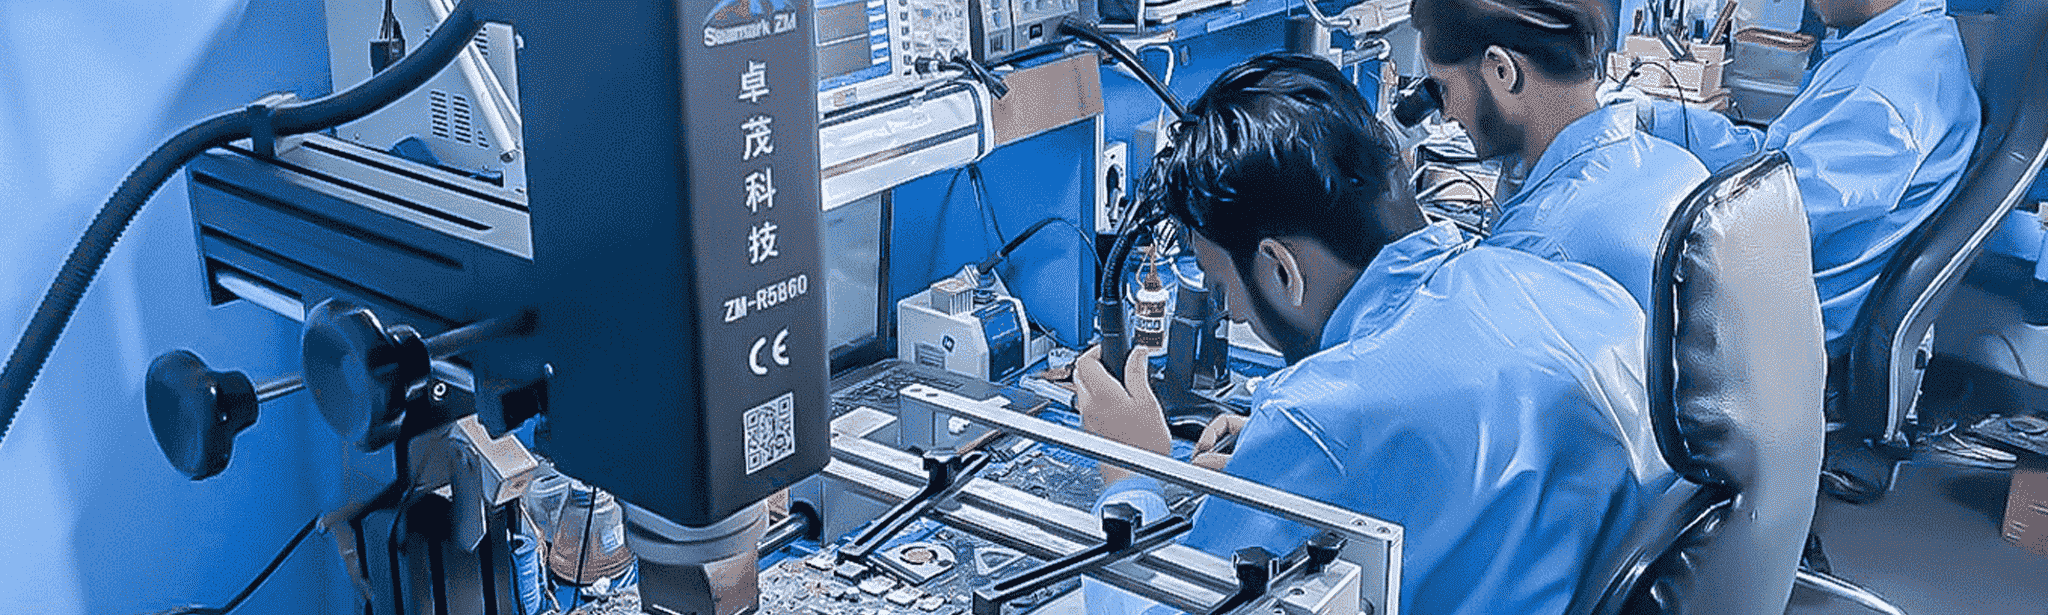 Chip-Level laptop Repair Training in Nepal at Skill Training Nepal